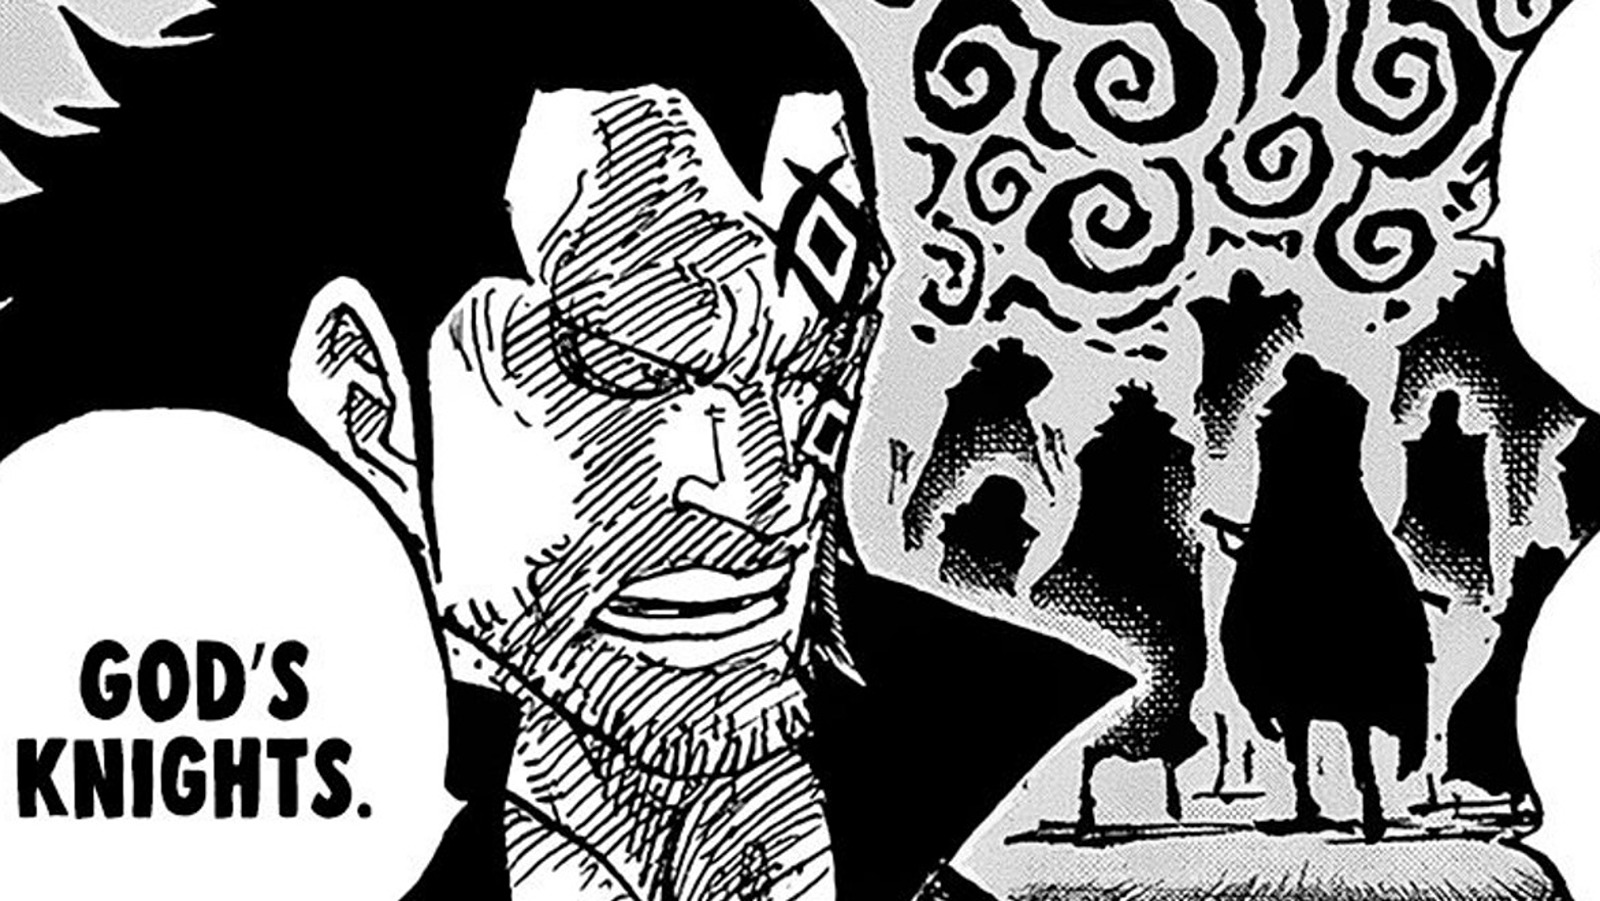 One Piece - Dragon's true identity, Monkey D. Family tree part 1